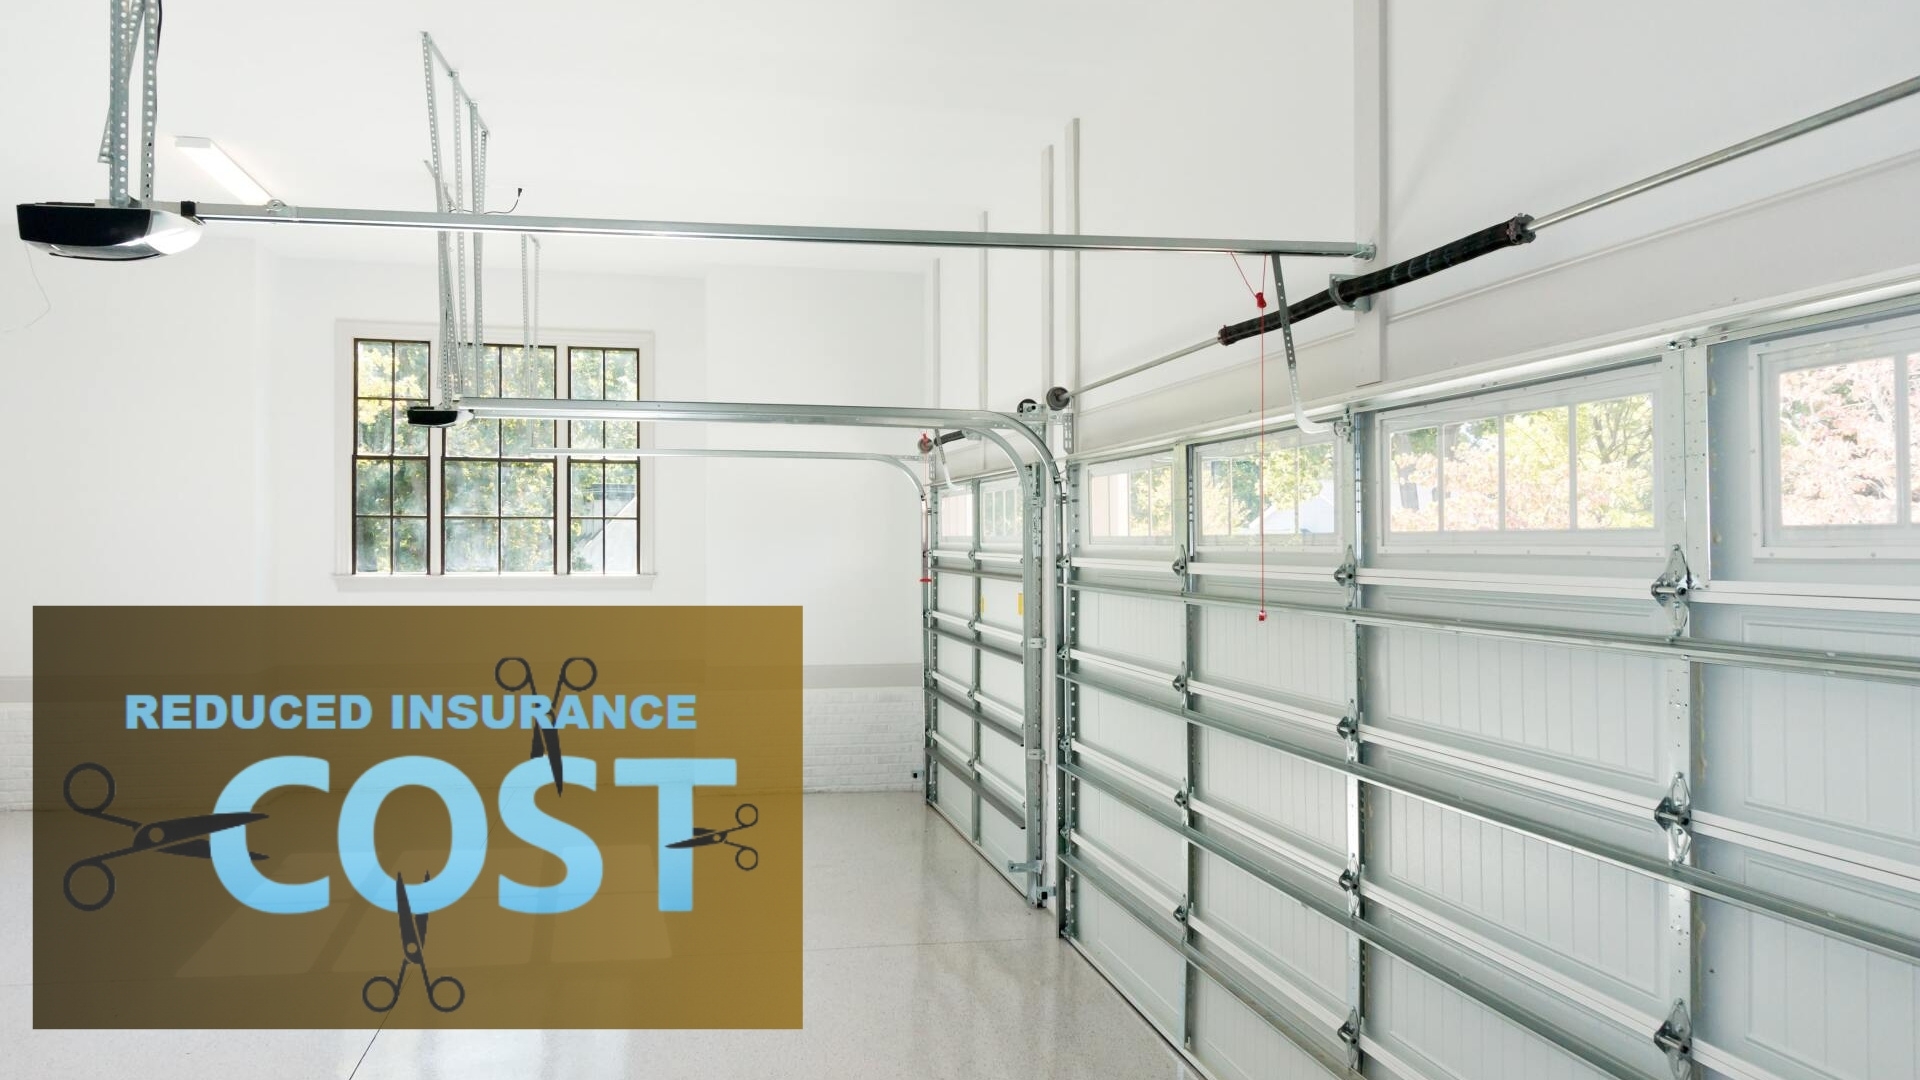 Having hurricane garage doors can reduce insurance cost